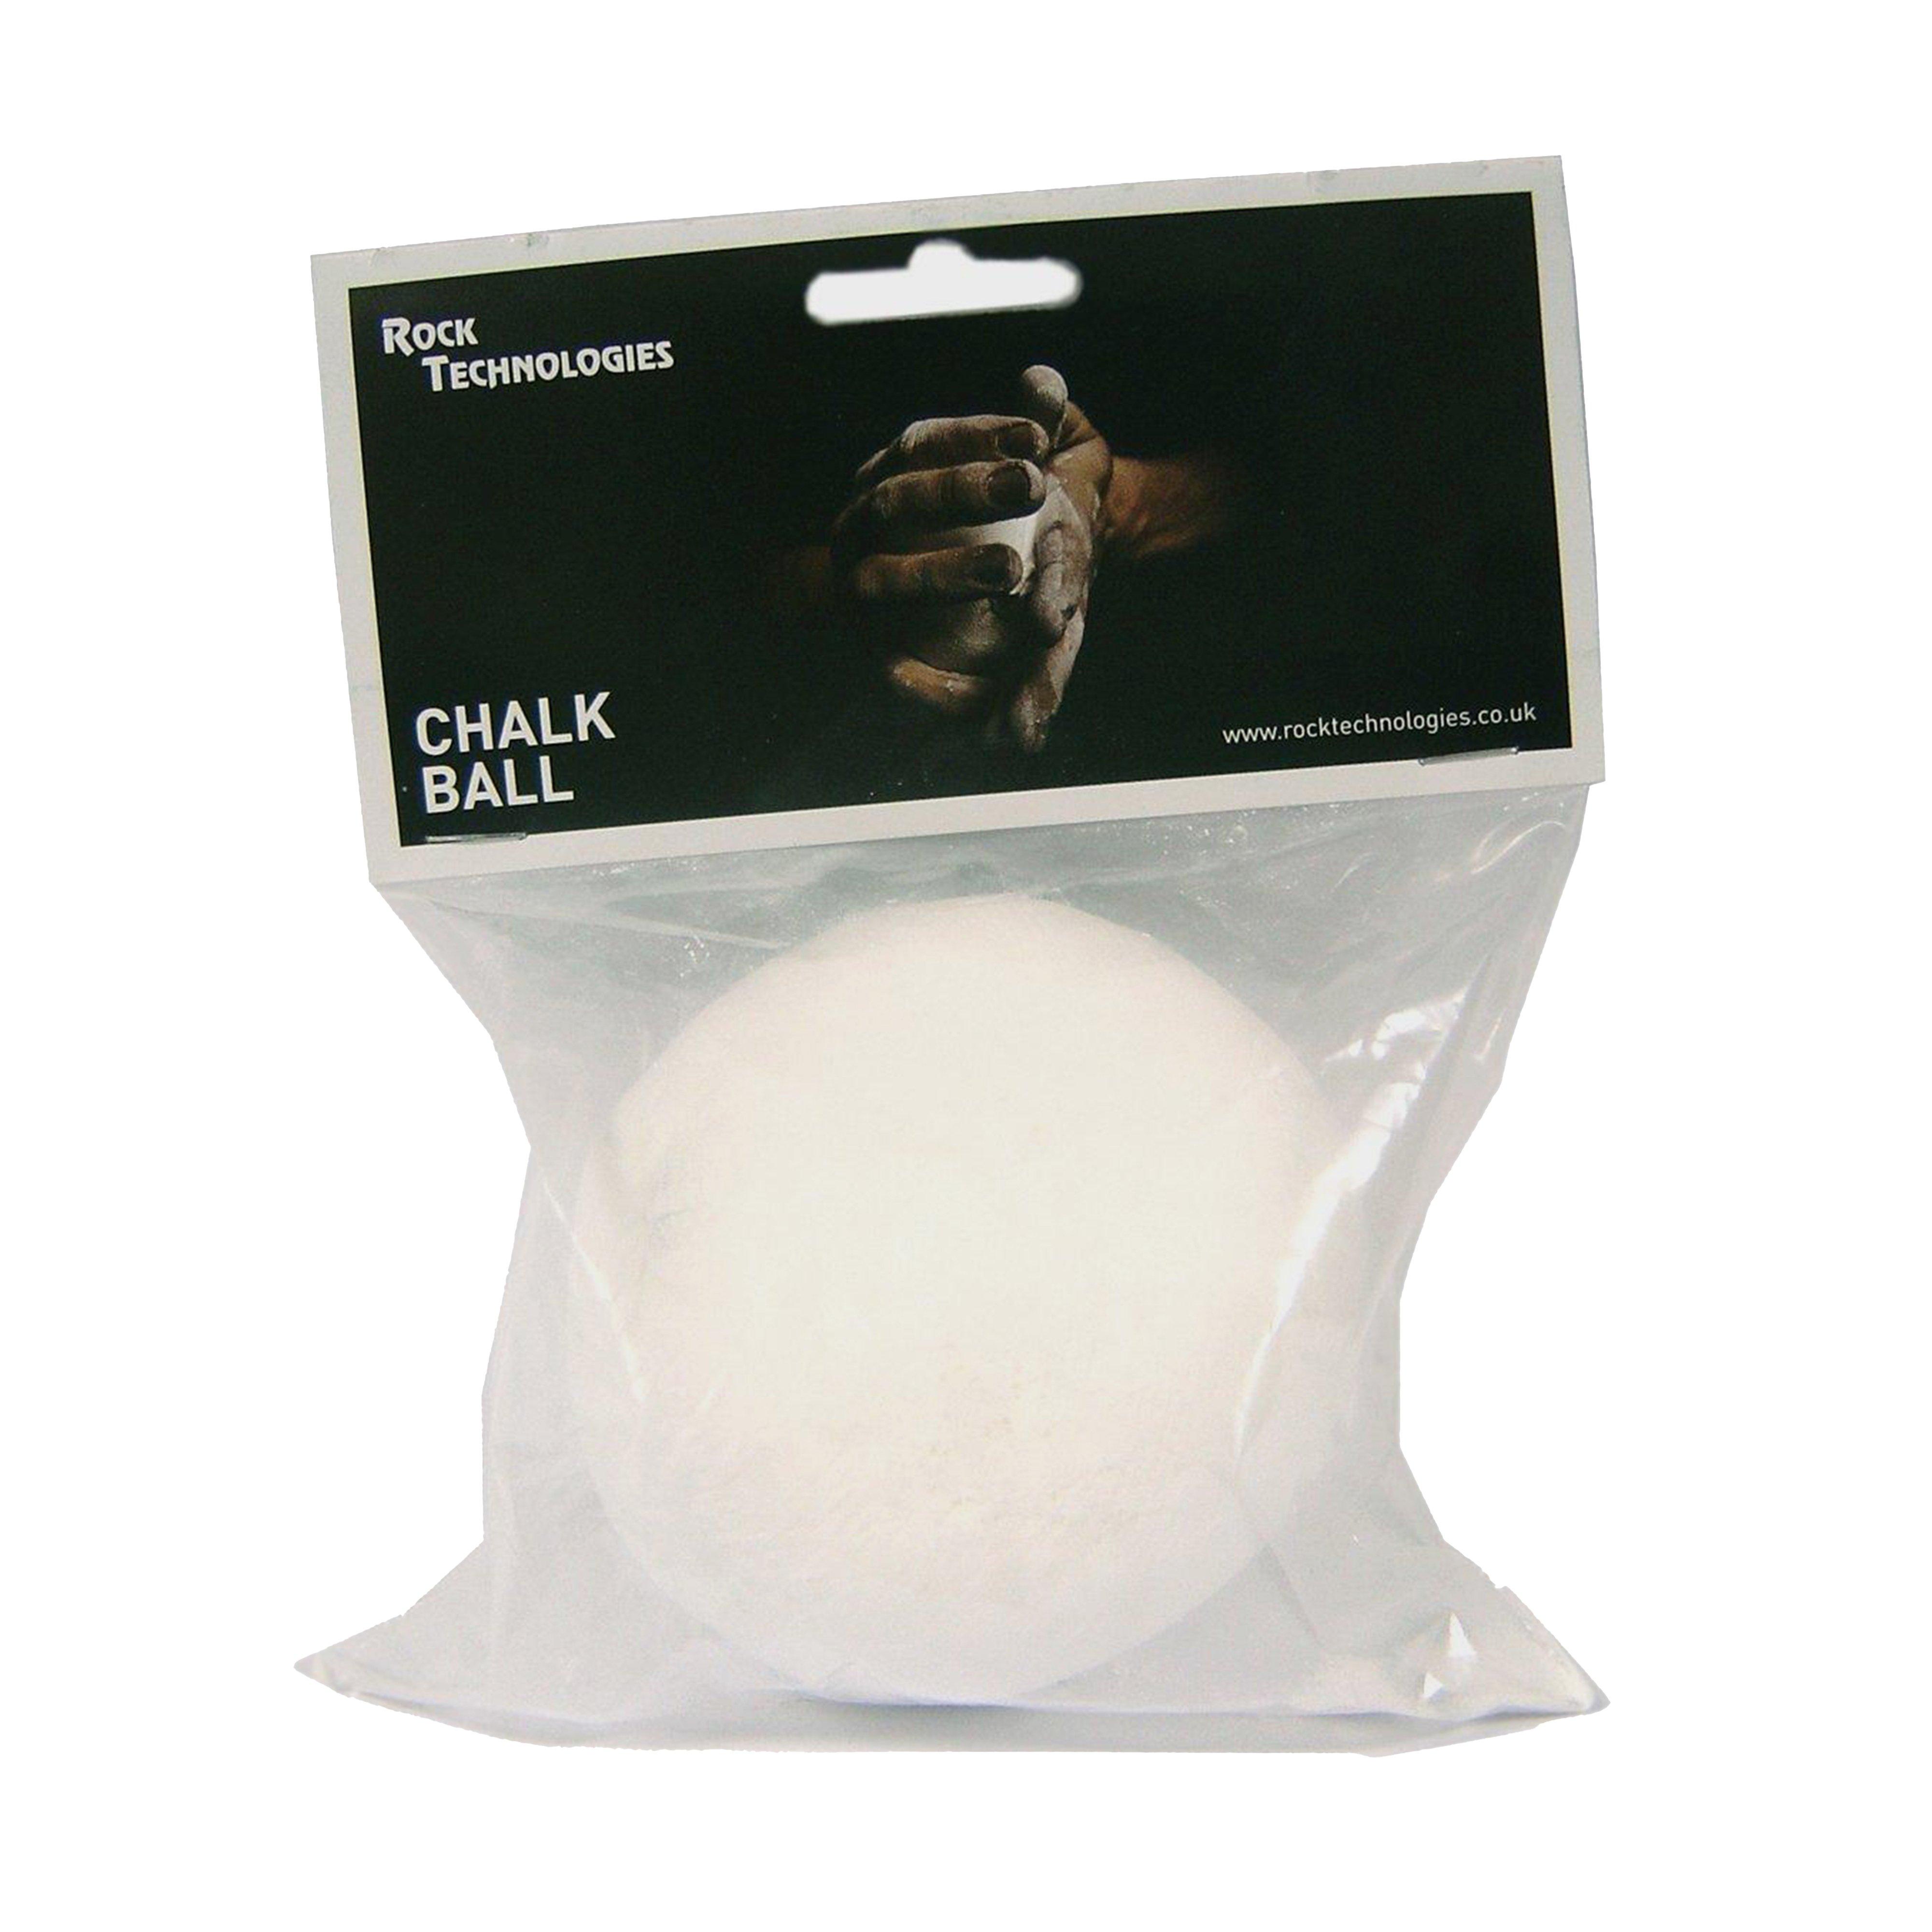 Rock Technologi Chalk Ball Review